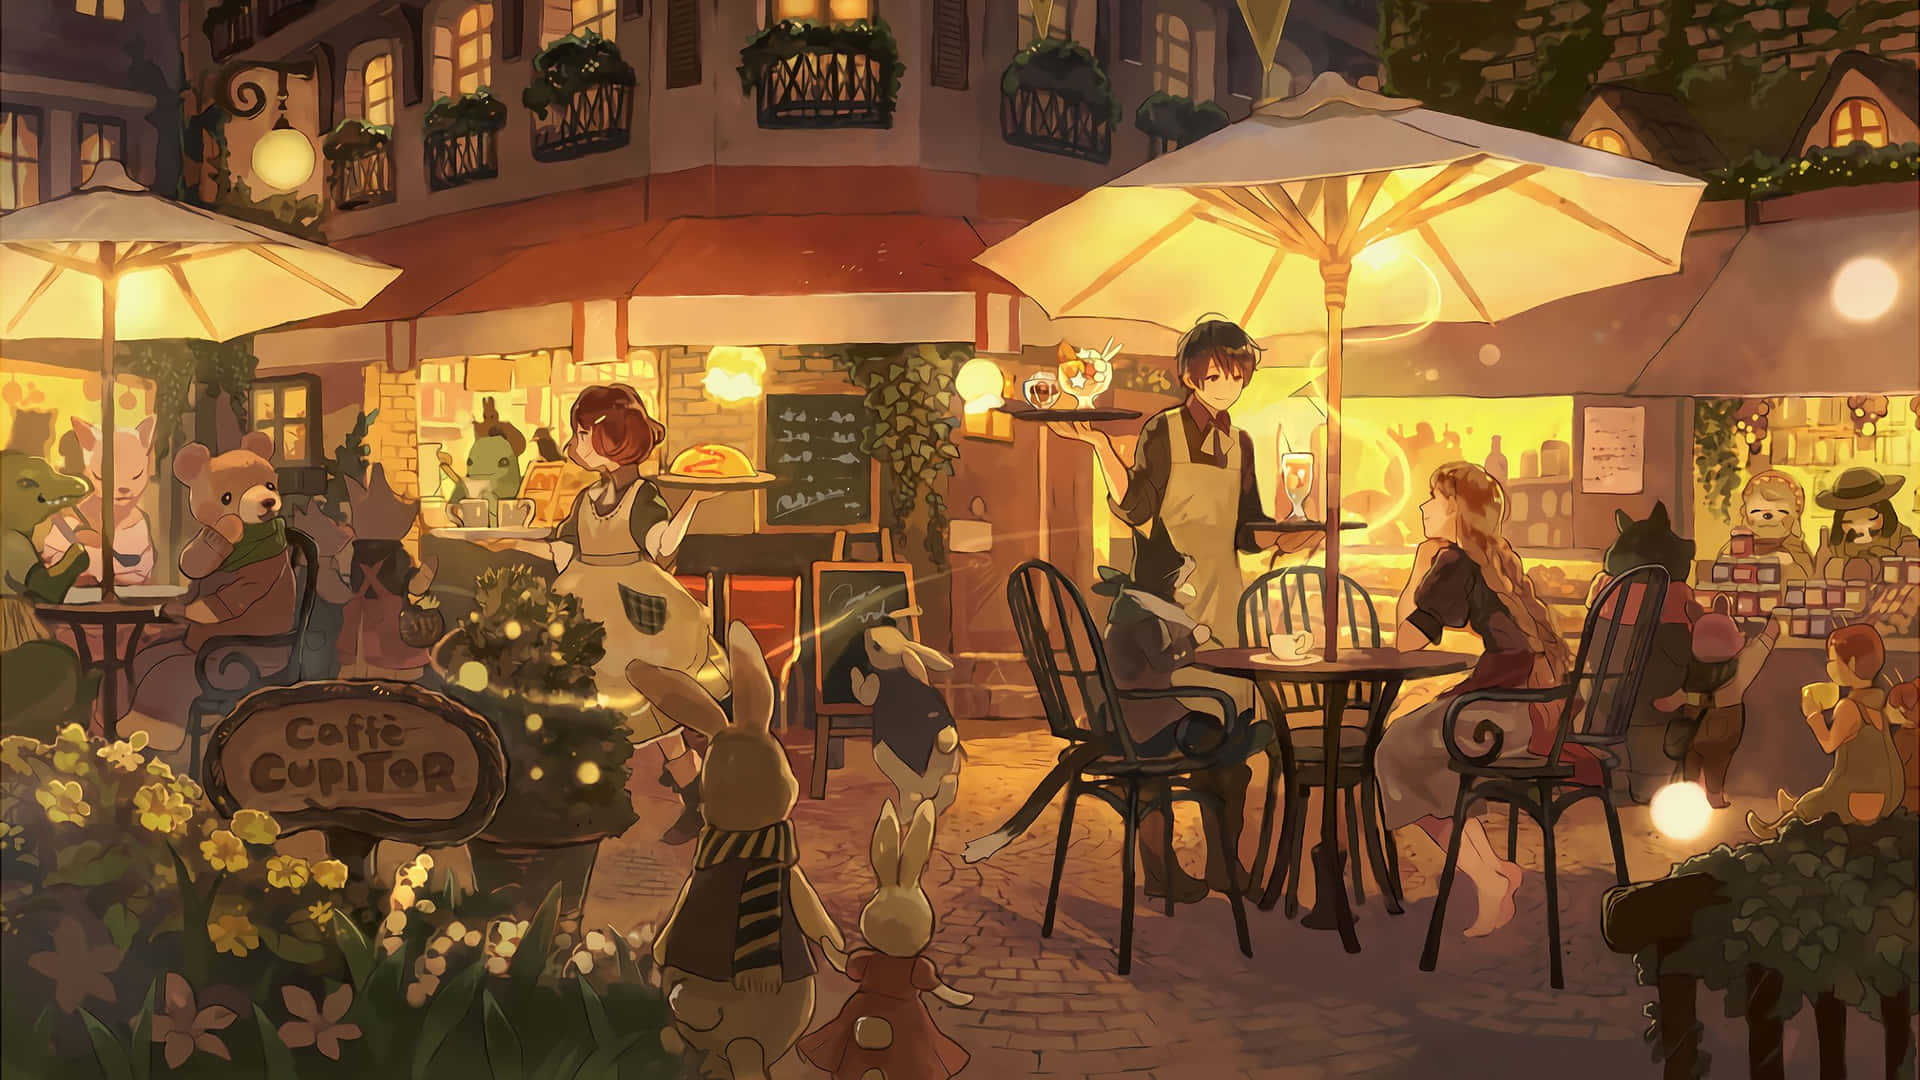 Watch The Café Terrace and Its Goddesses - Crunchyroll